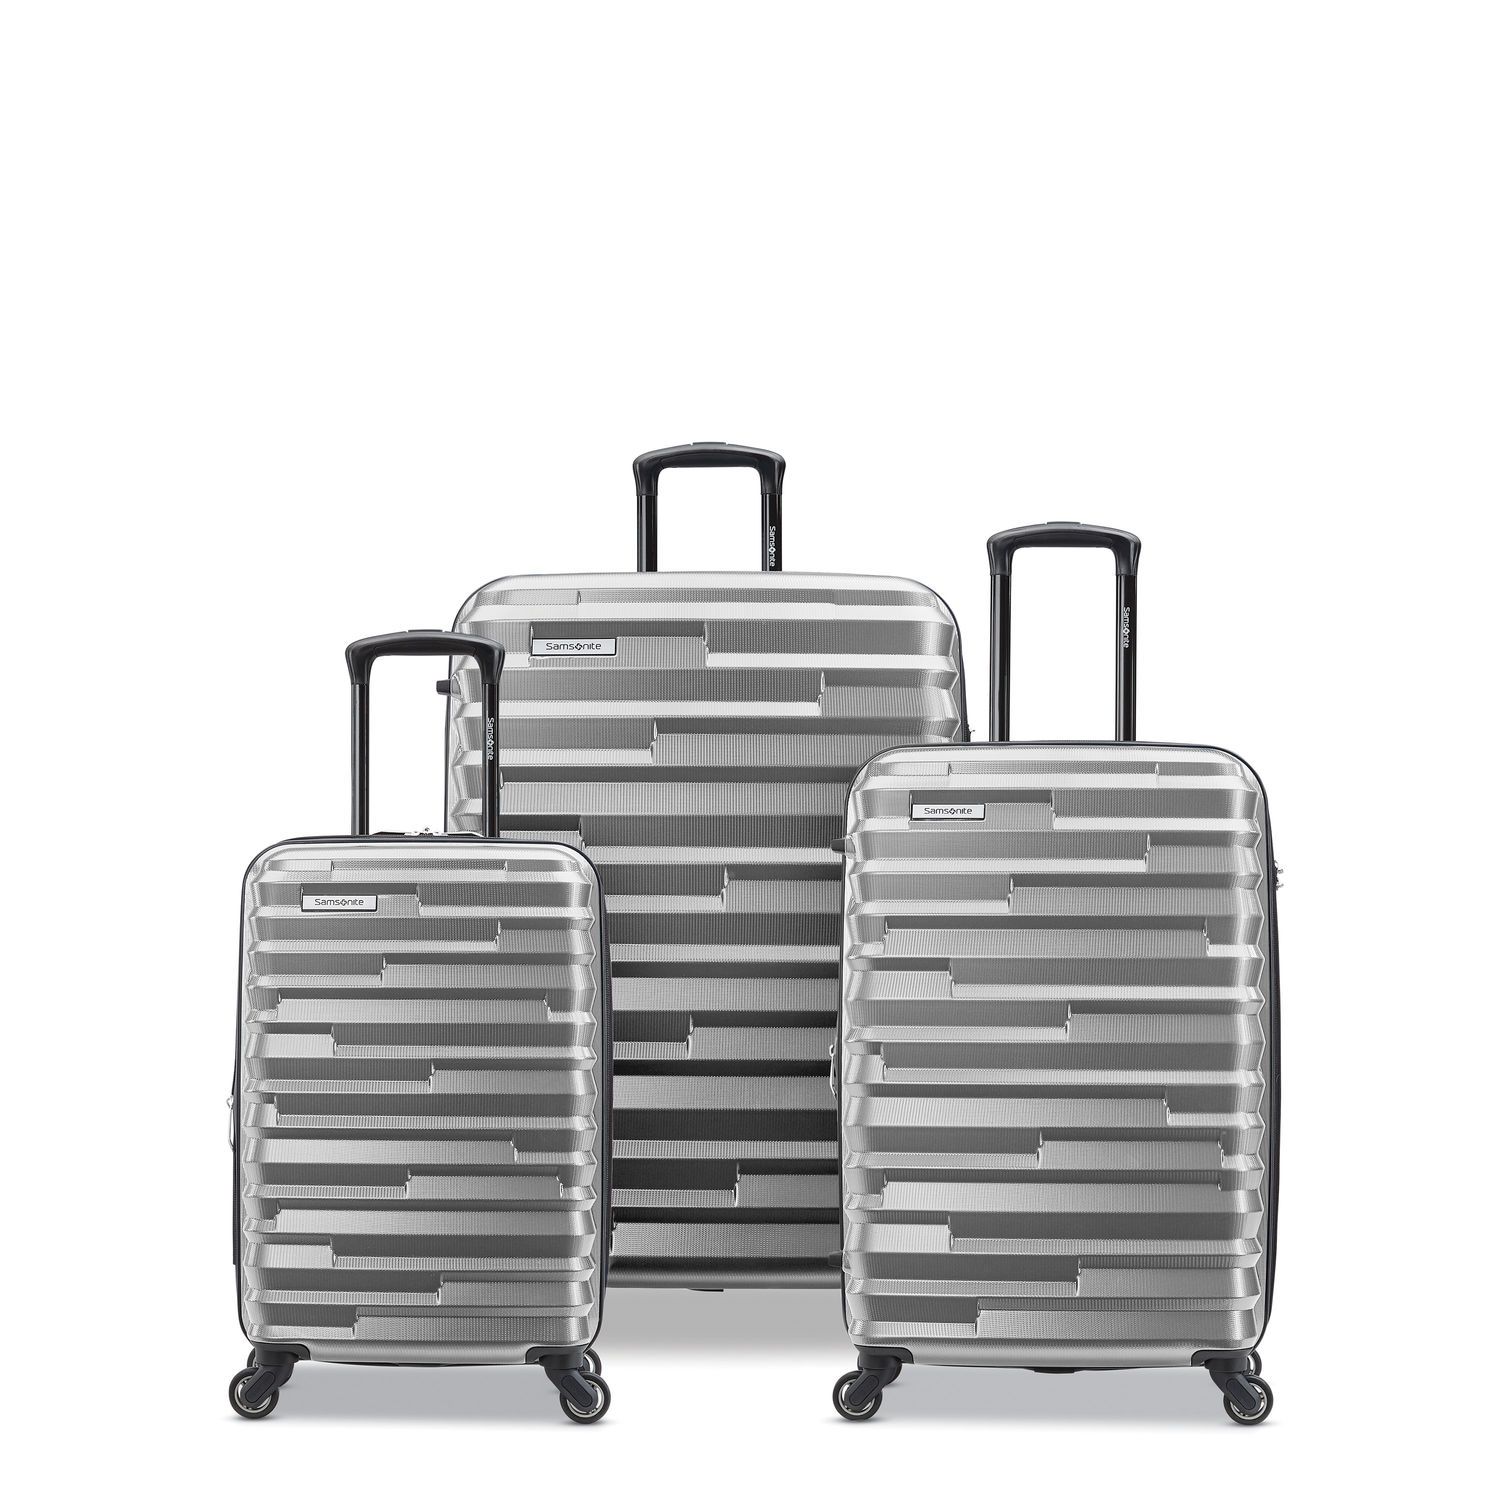 Samsonite Ziplite 4.0 3 Piece Spinner Expandable Luggage Set - Silver Oxide